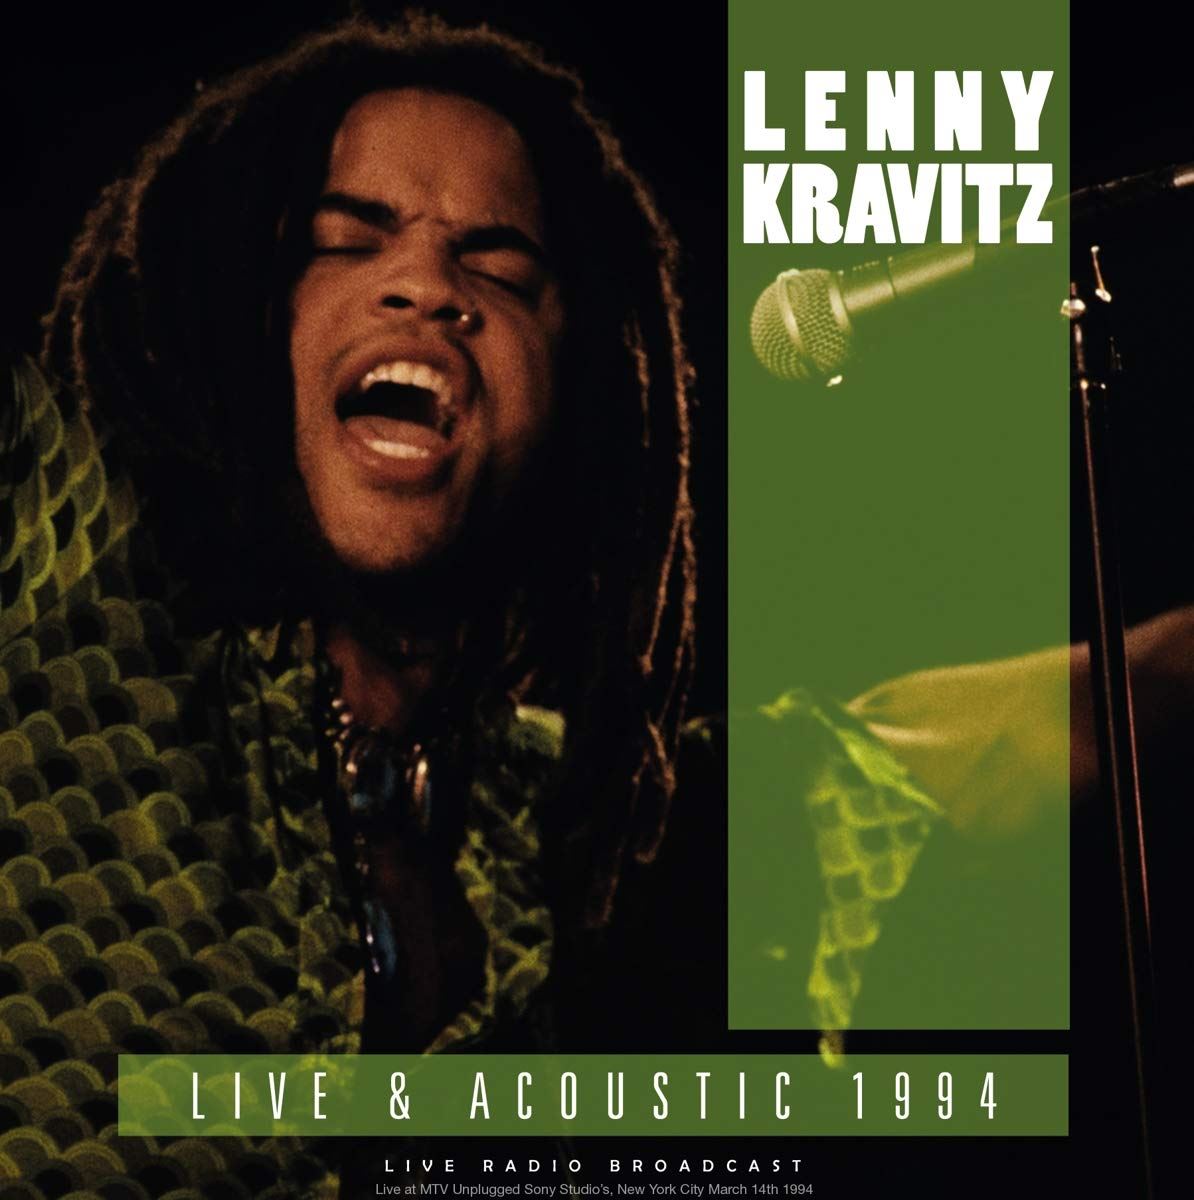 Lenny Kravitz - Live & Acoustic 1994 - Vinyl